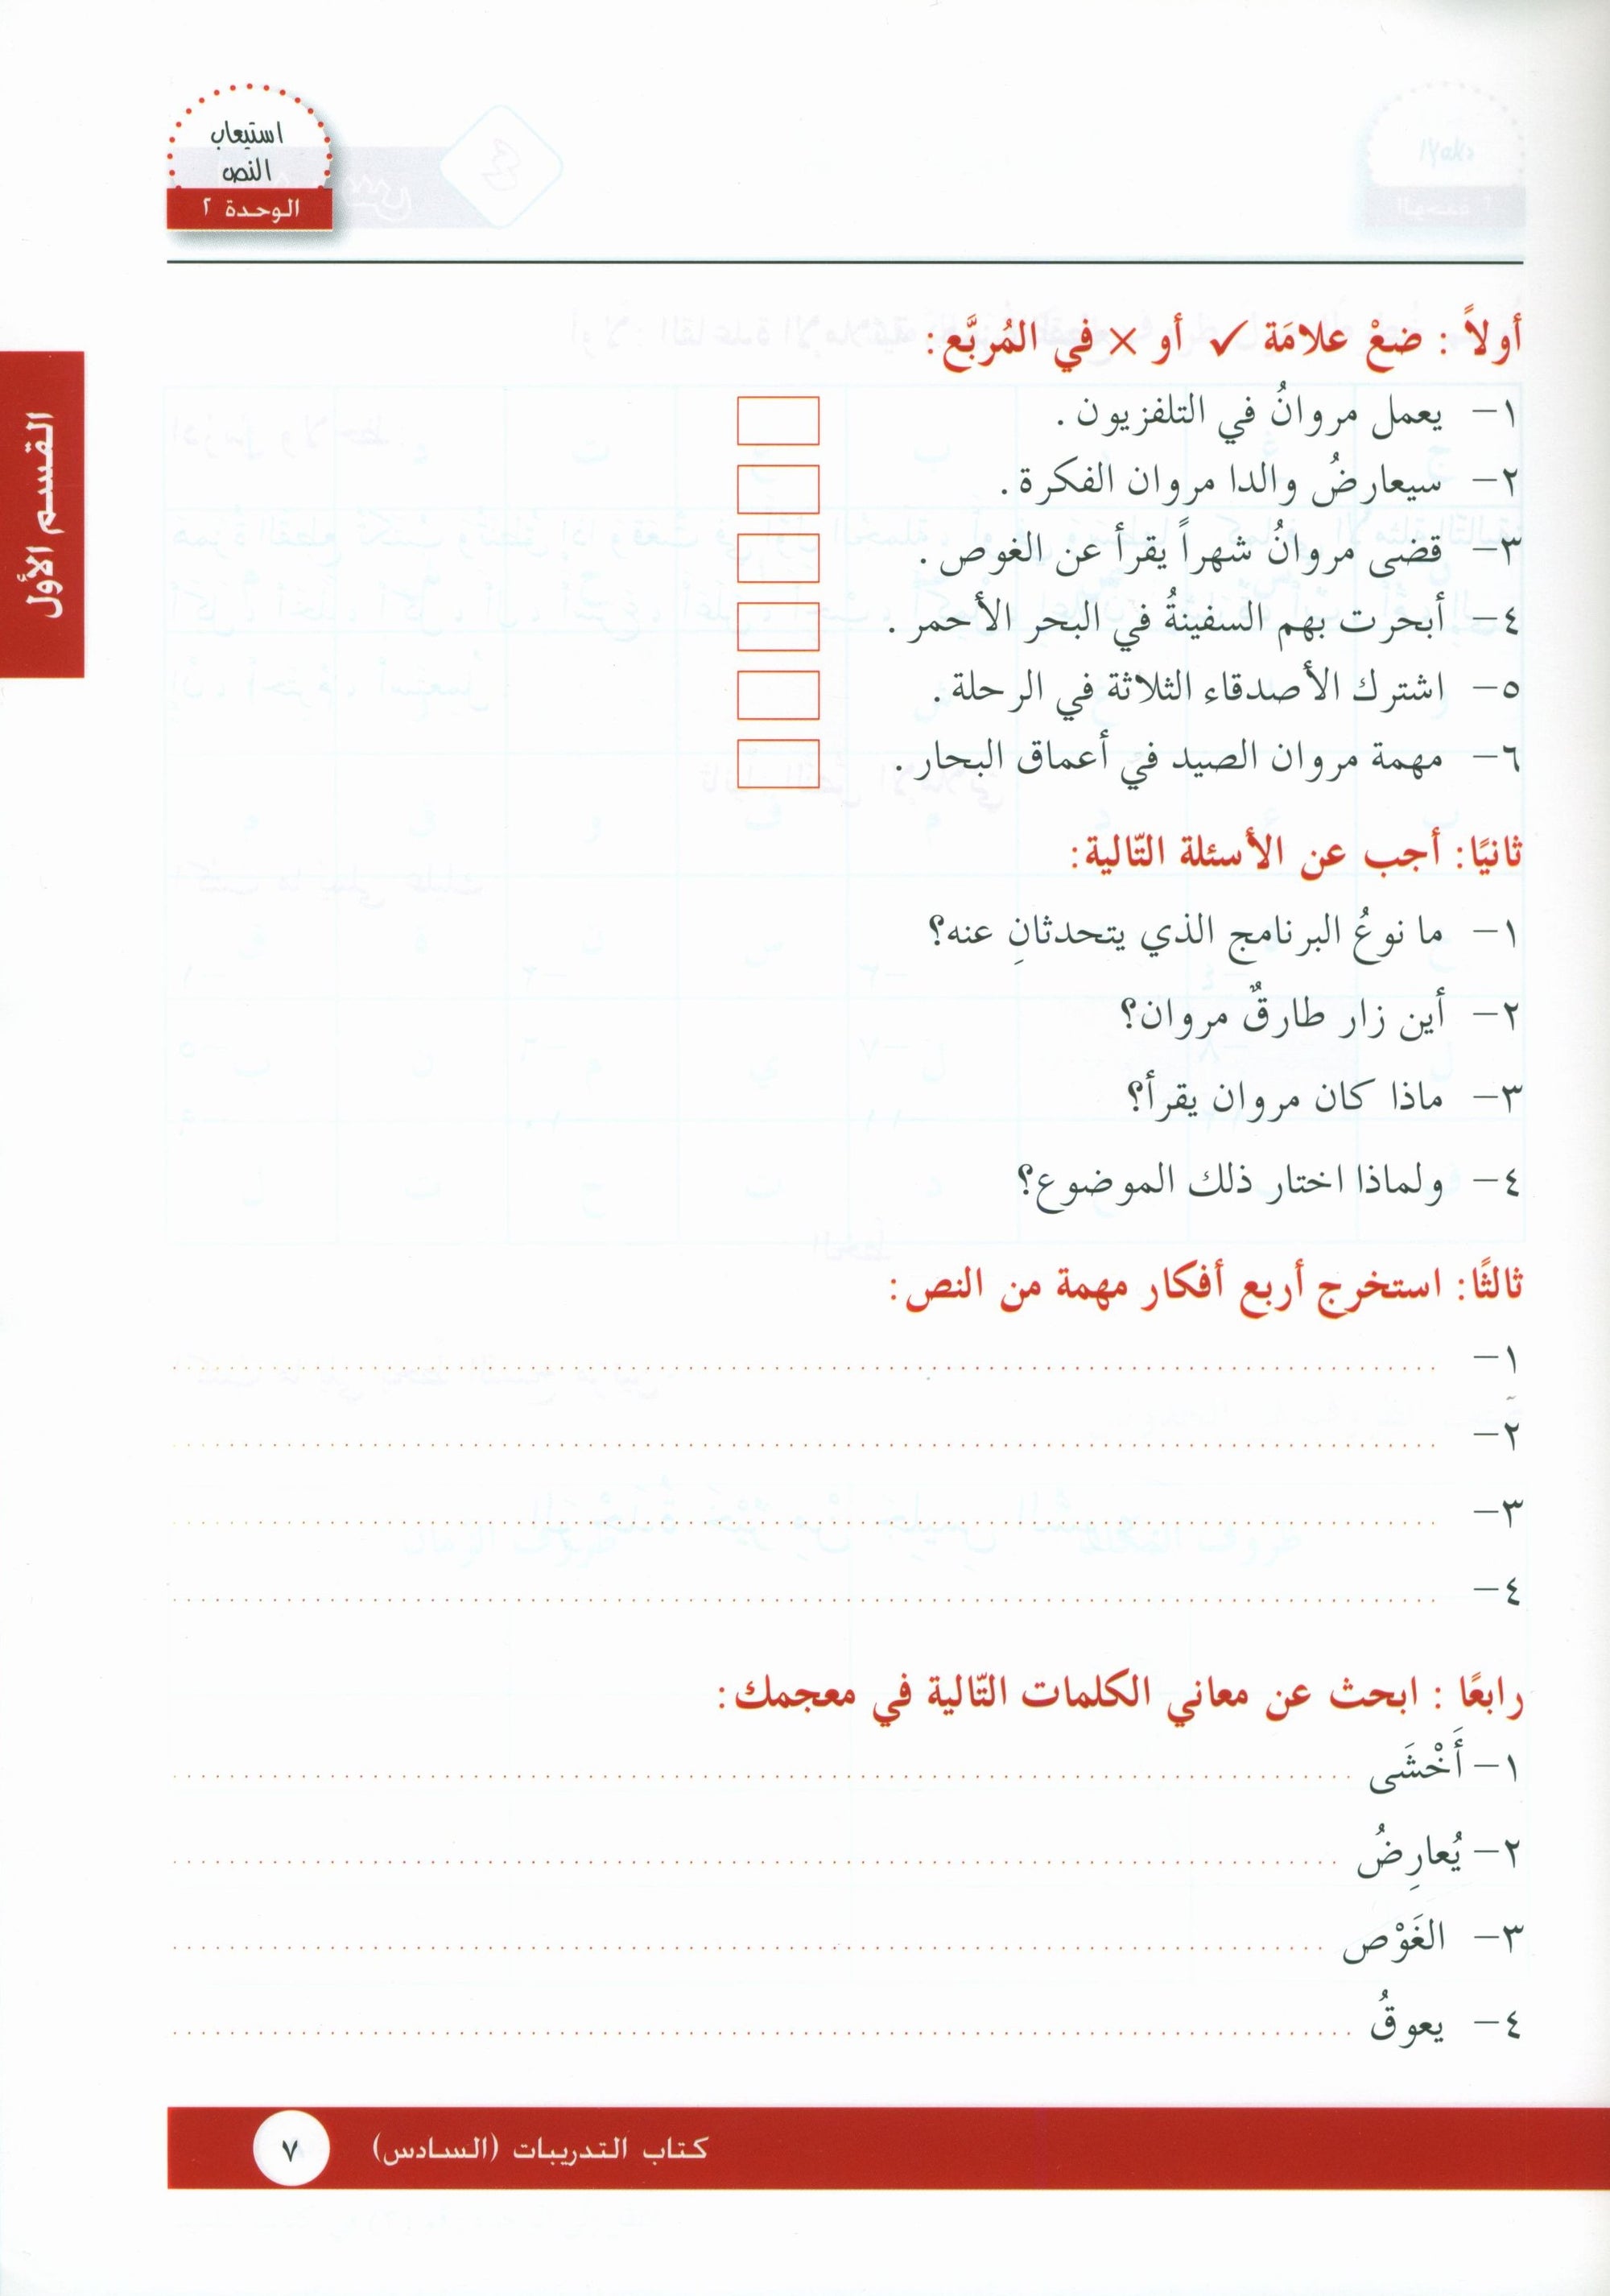 I Love Arabic Workbook Level 6 أحب العربية كتاب التدريبات